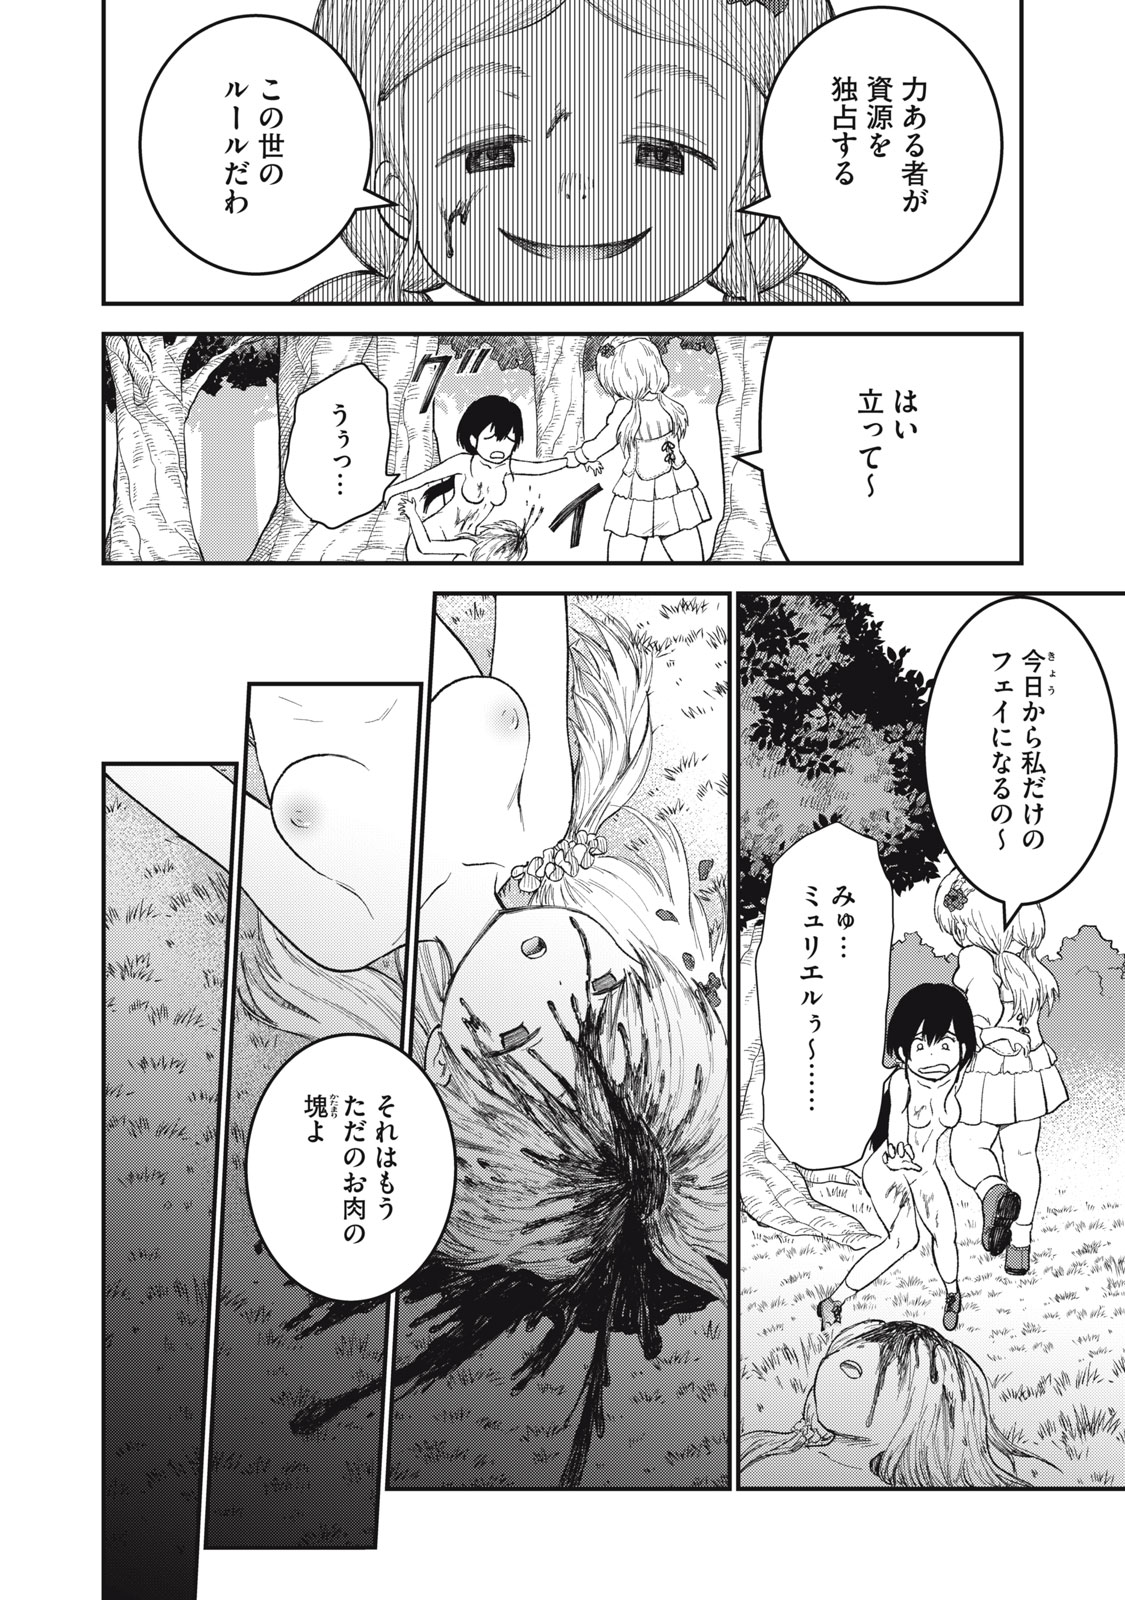 Itadaki no Lvitsa - Chapter 18 - Page 4